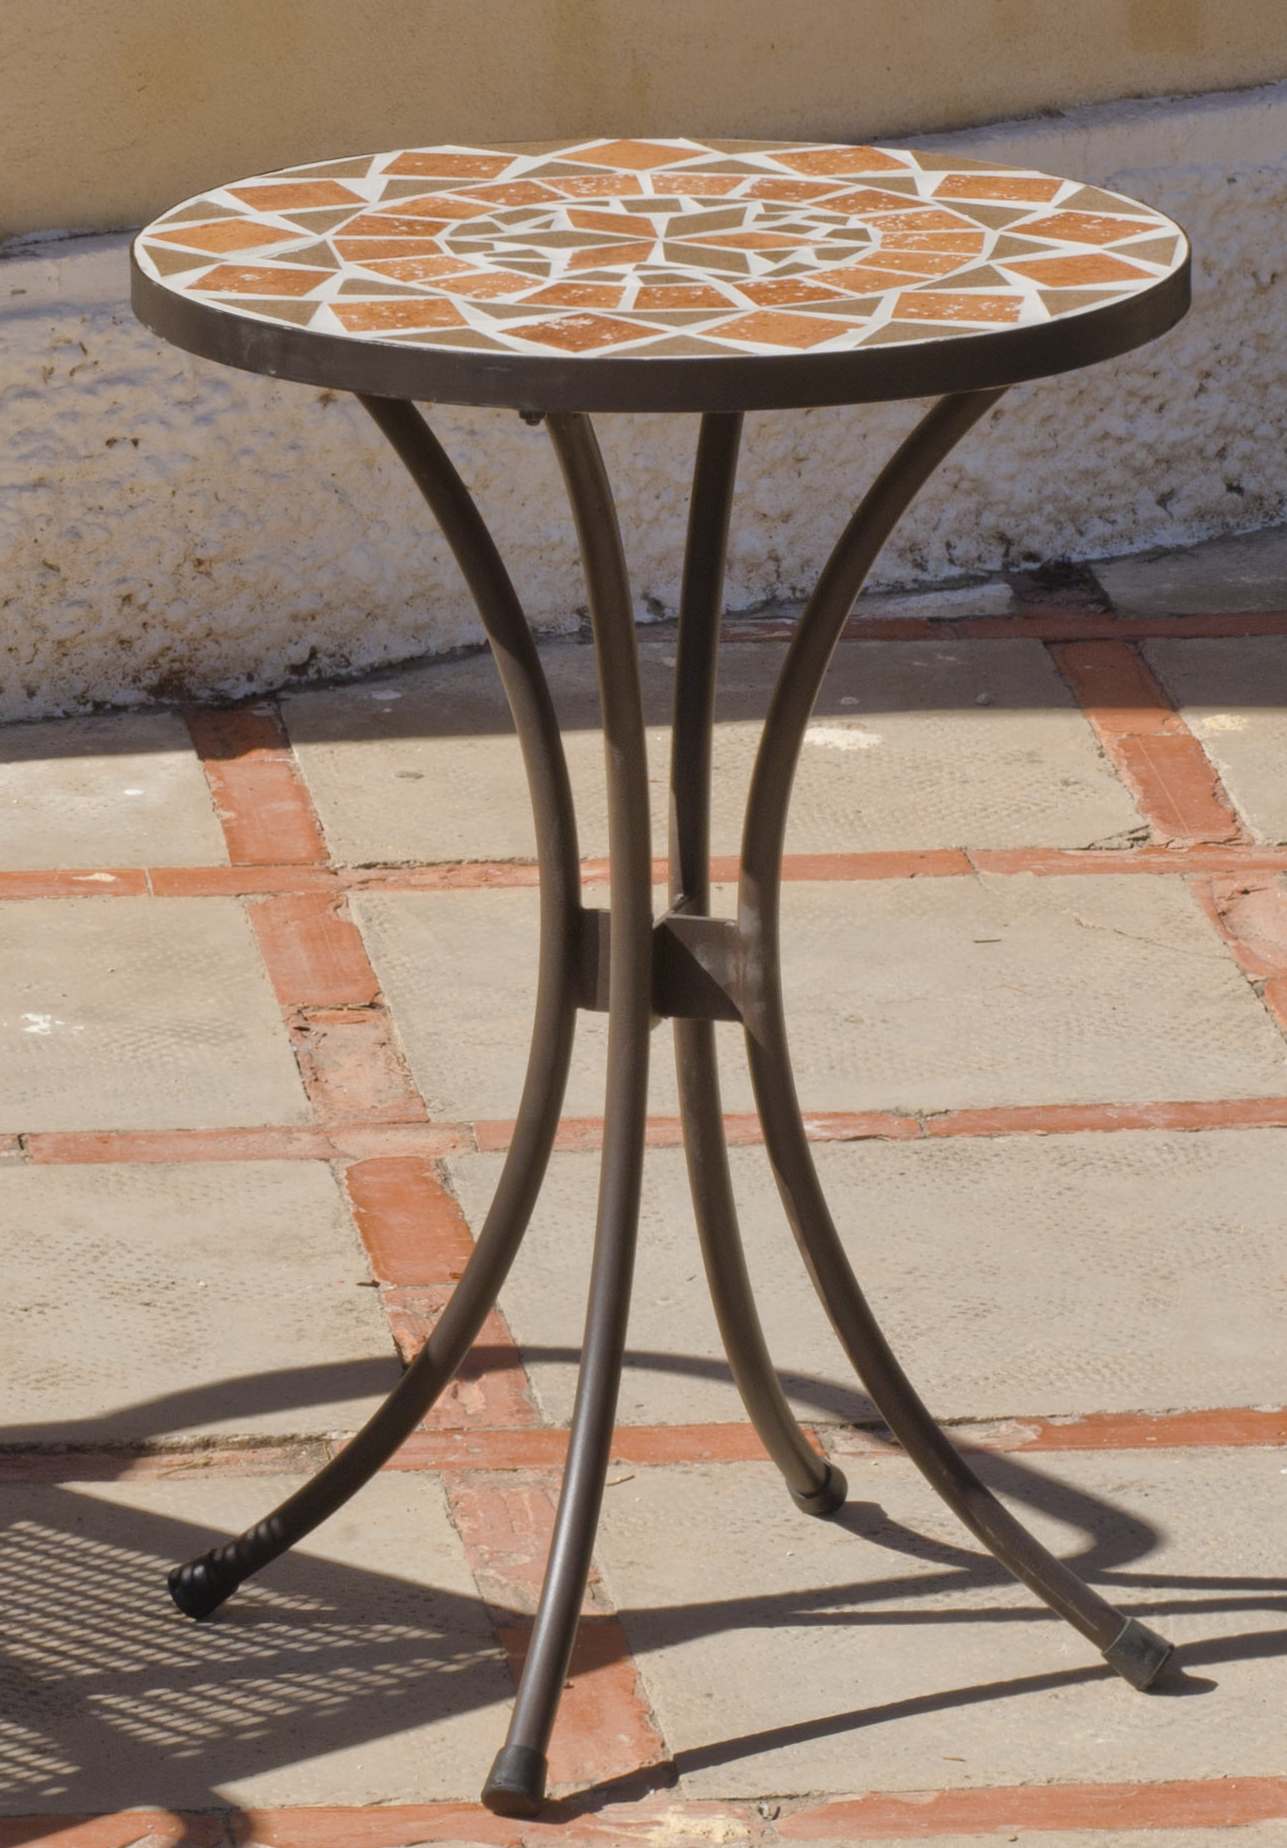 Mesa para jardín o terraza de forja, con tablero mosaico de 40 cm. de diámetro.